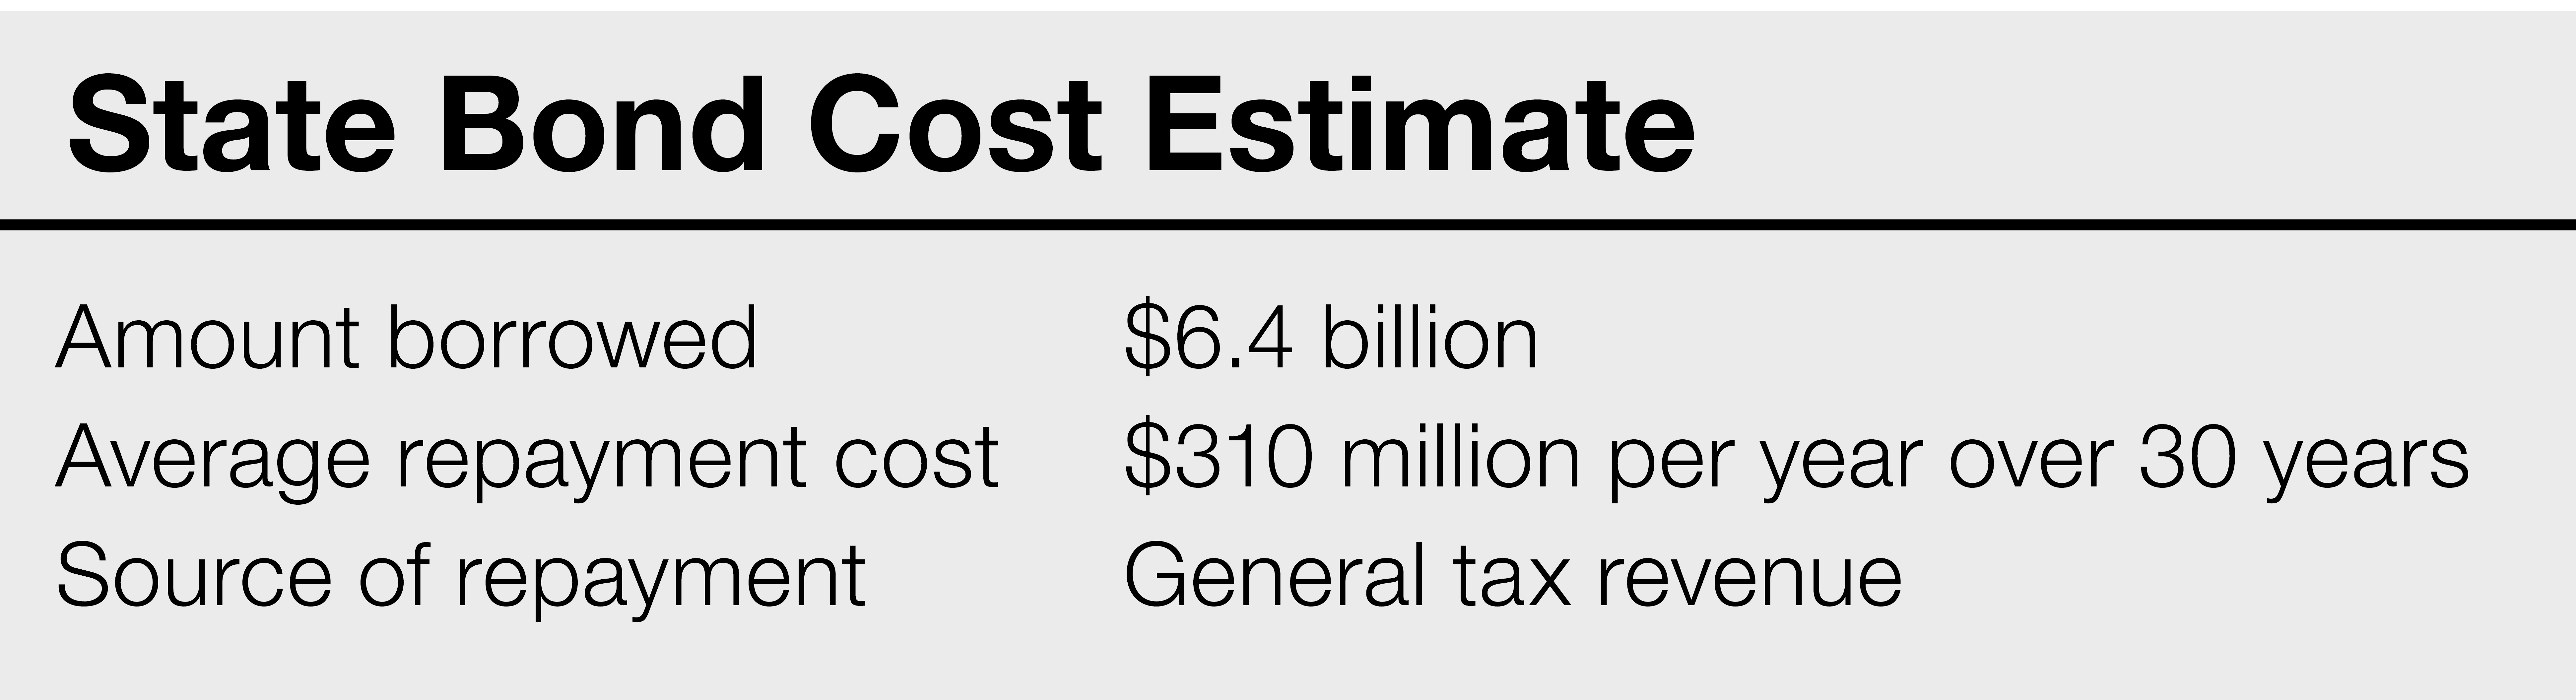 Figure of summary of state bond cost estimate.